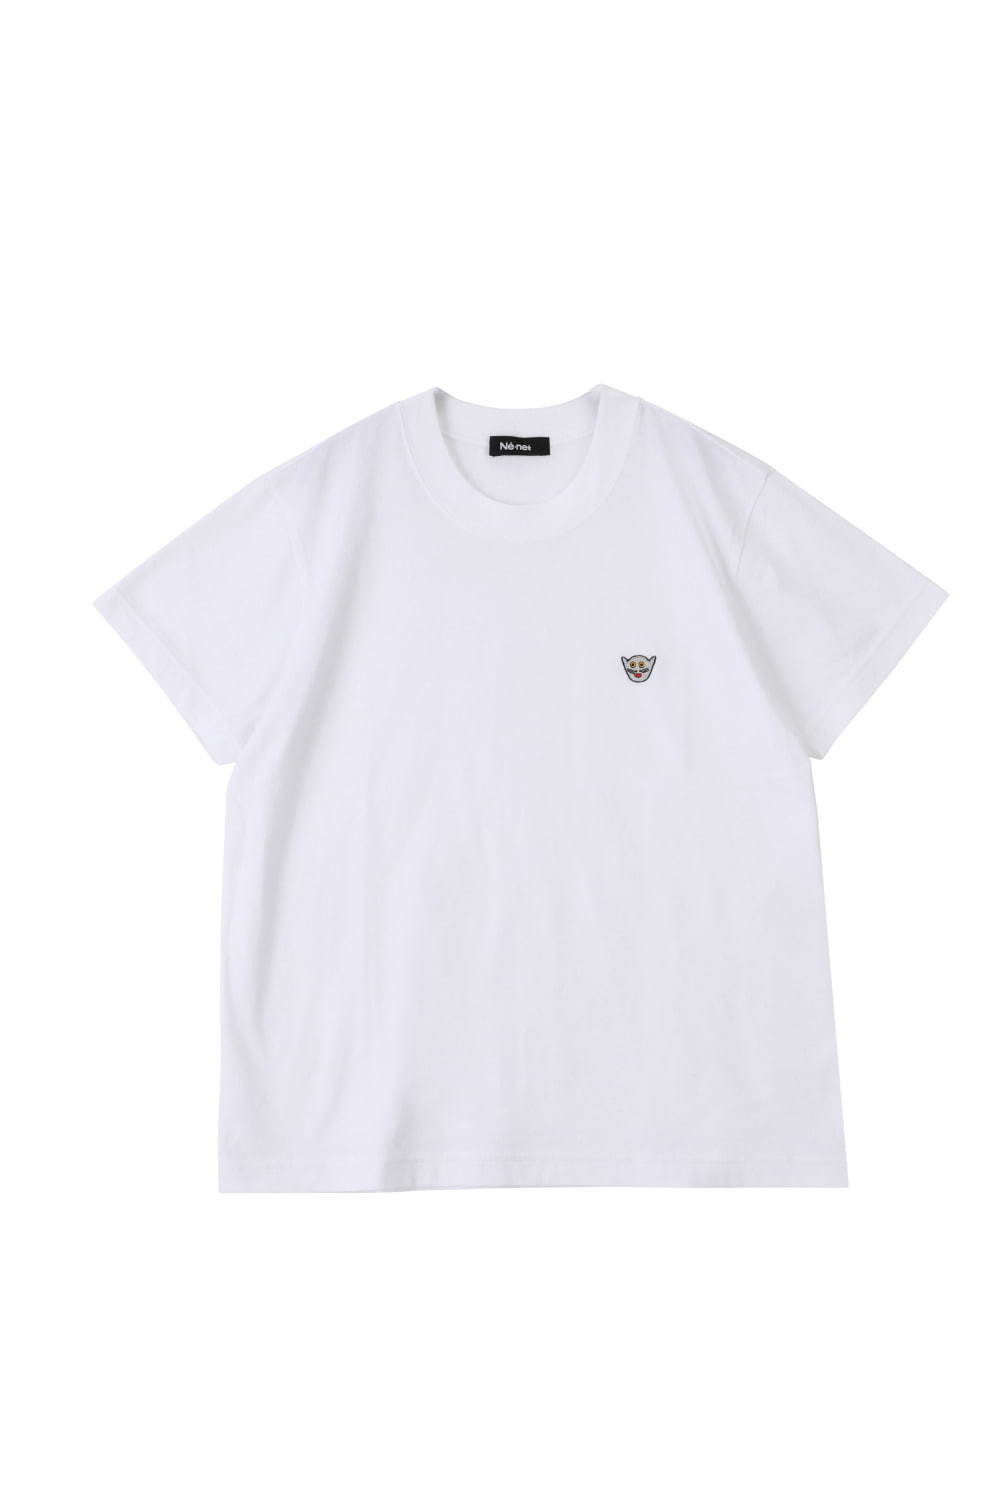 Tシャツ(ホワイト) 全17種類 6,600円(税込)＜数量限定＞